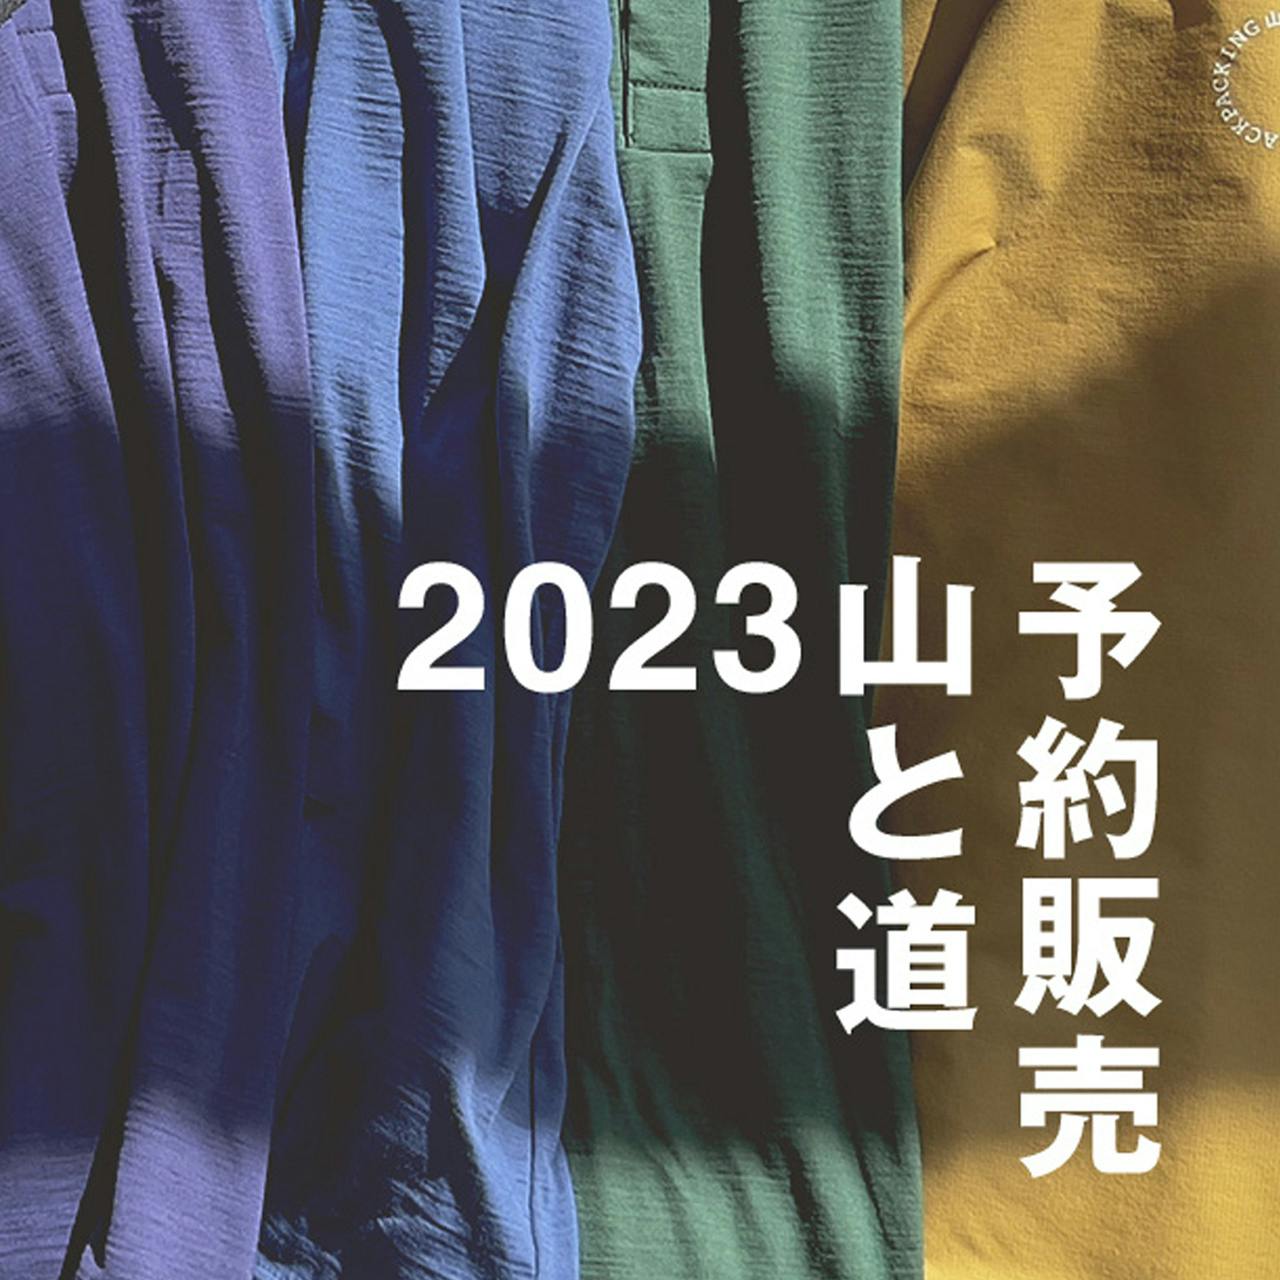 Yamatomichi<br>2023 Preorder<br>July 31 – Sep 2